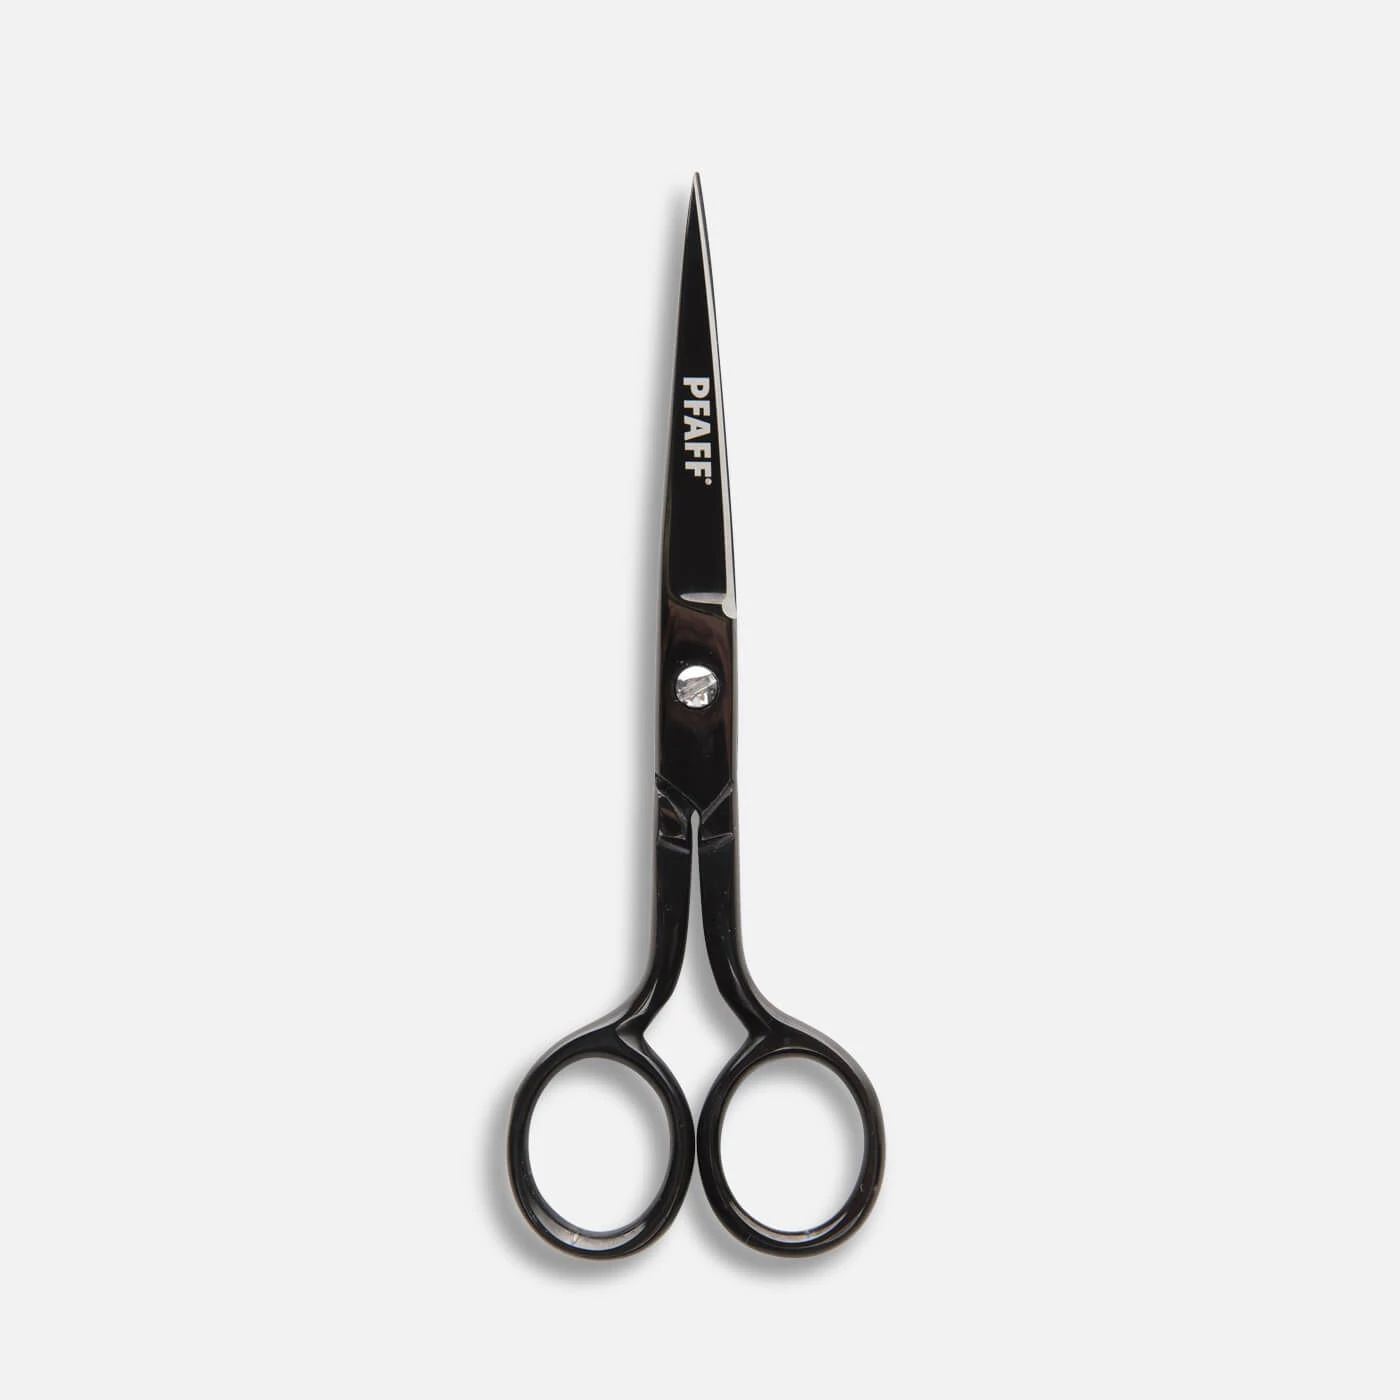 Shop PFAFF sewing scissors